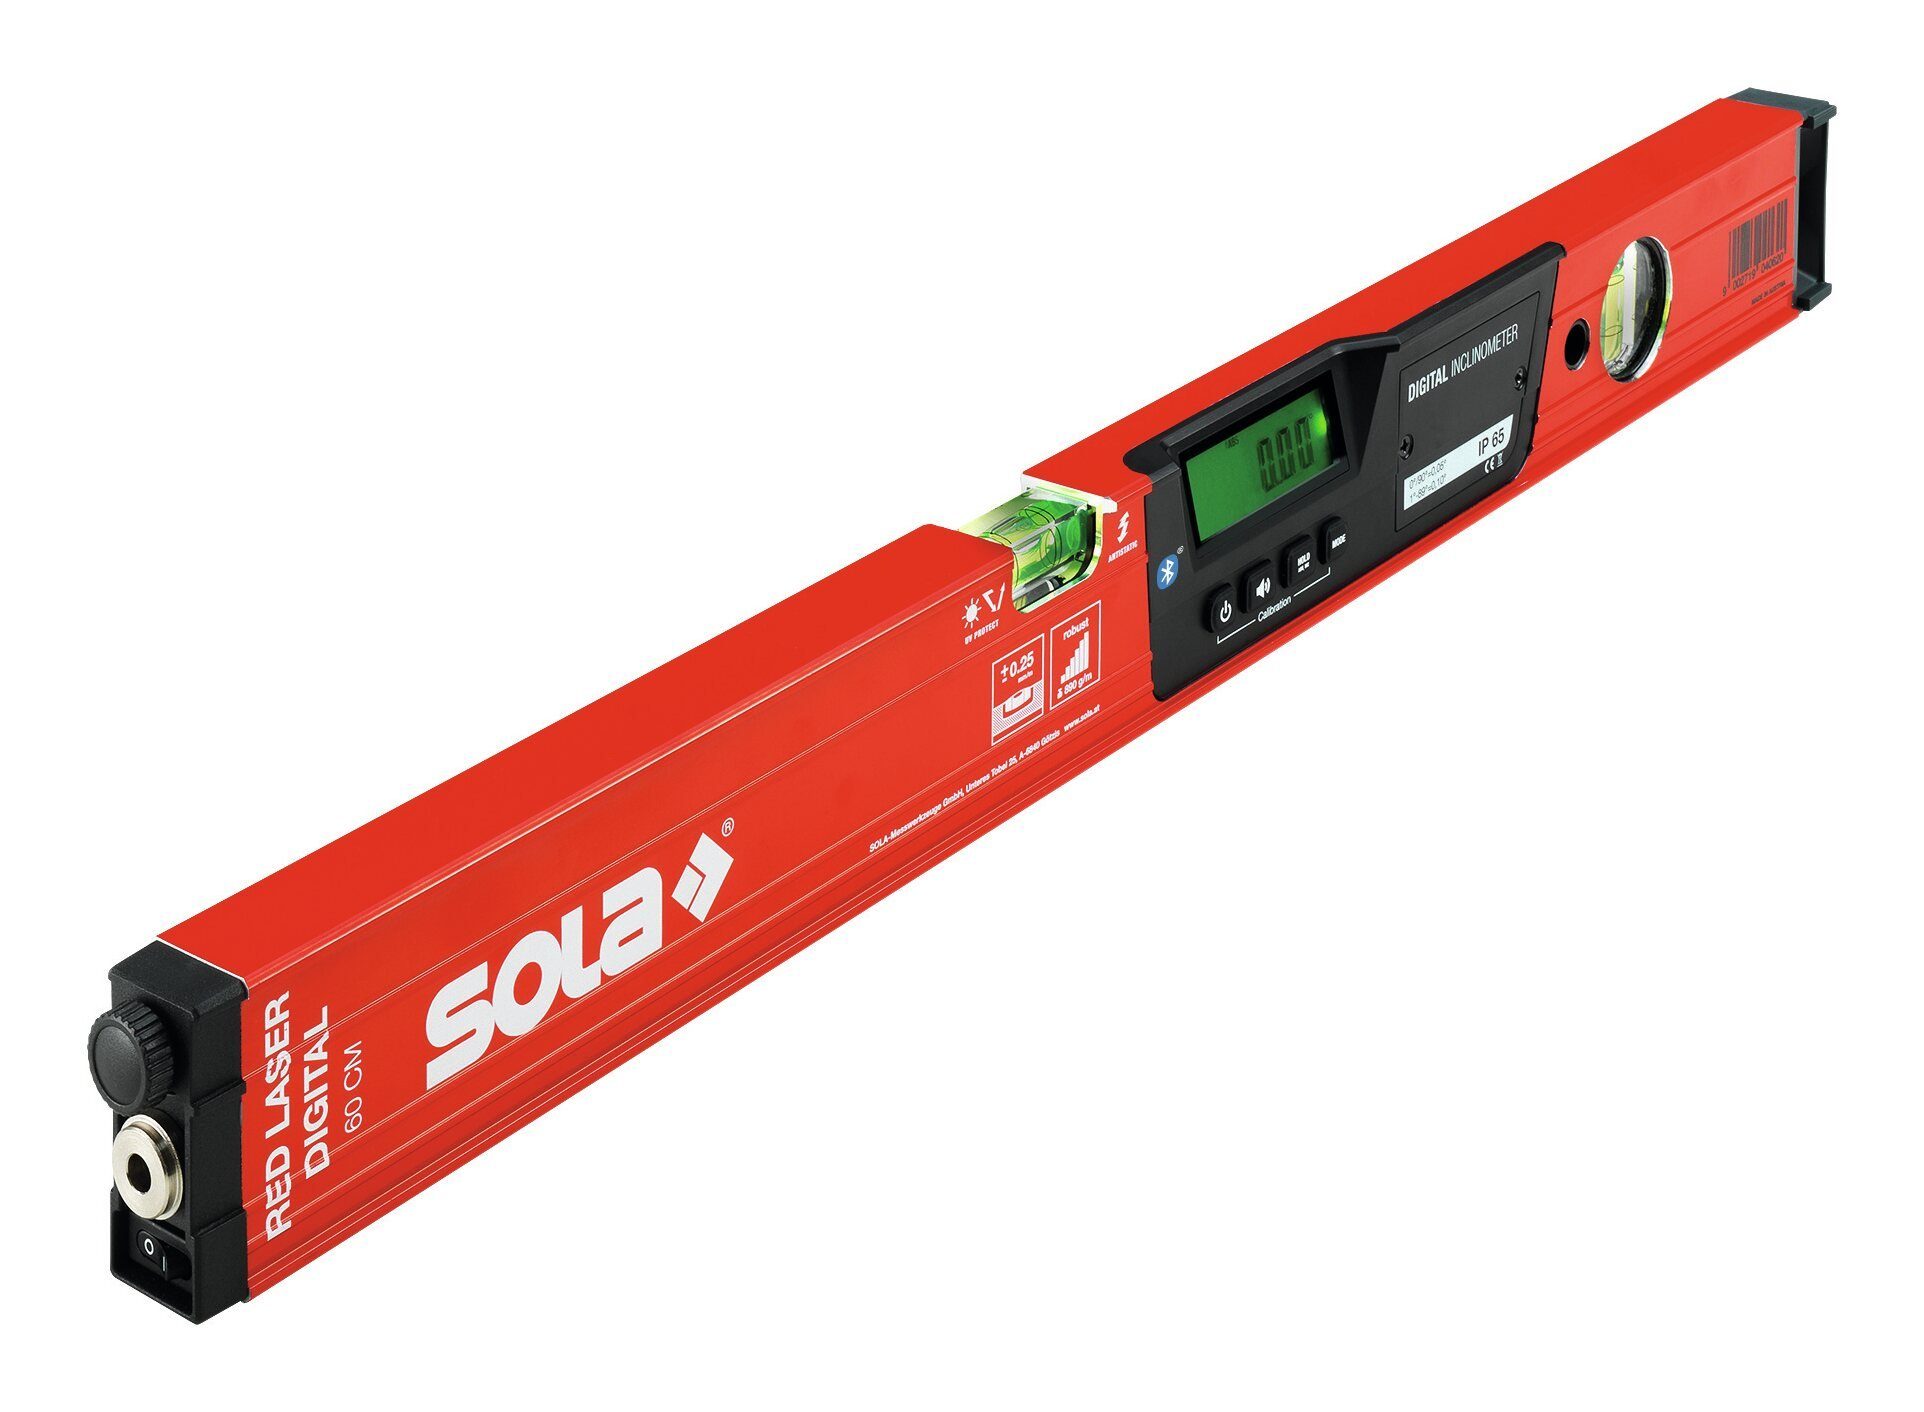 RED digital Wasserwaage, SOLA Digitale Sola Laser